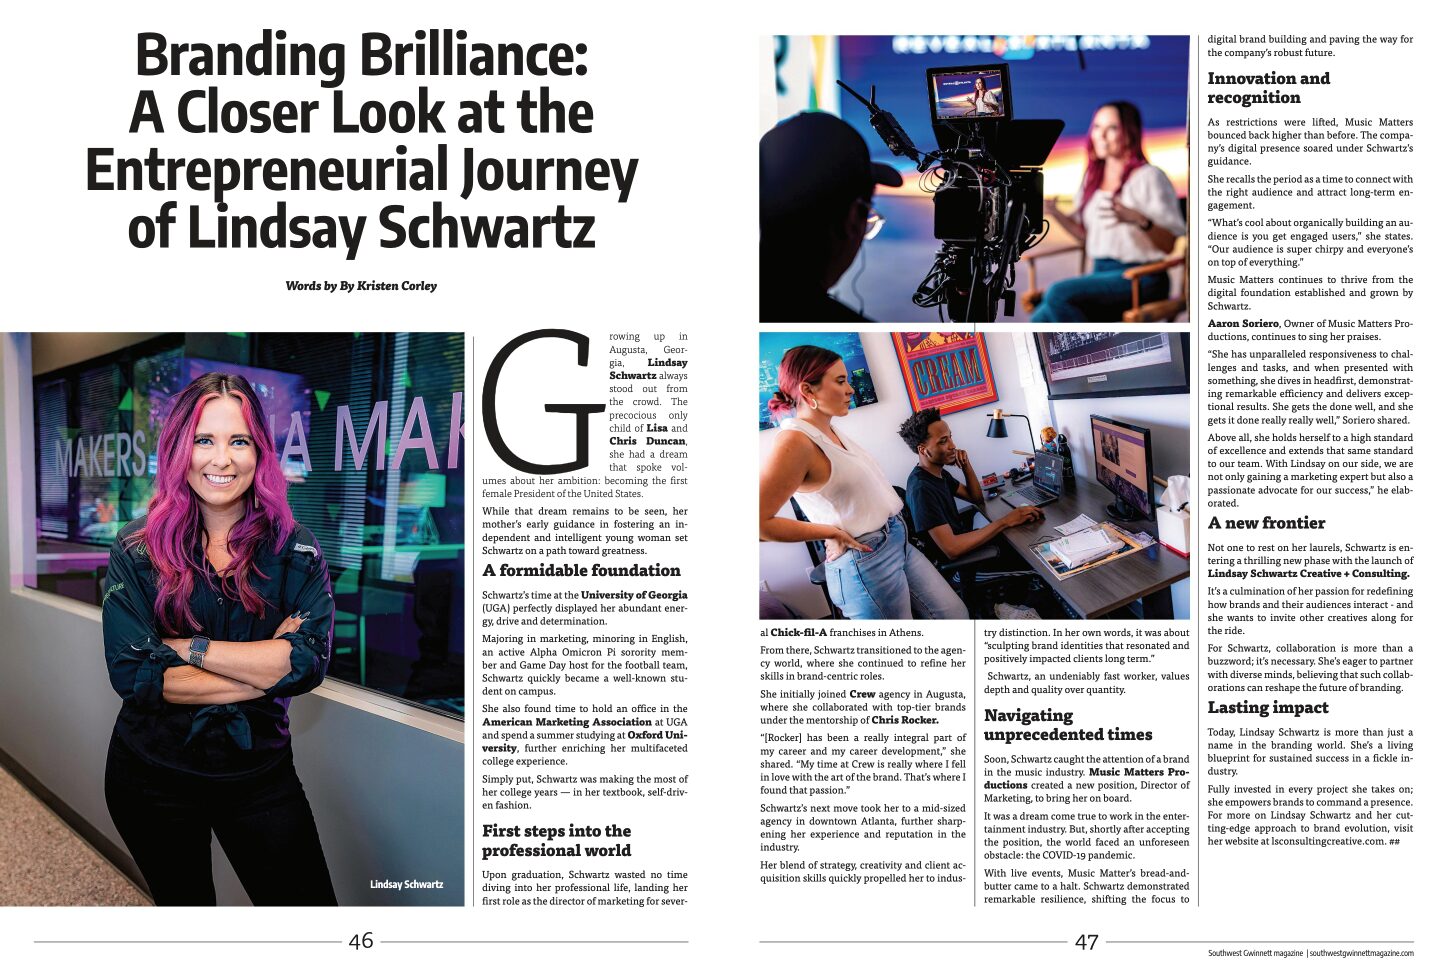 Branding Brilliance: A Closer Look at the Entrepreneurial Journey of Lindsay Schwartz